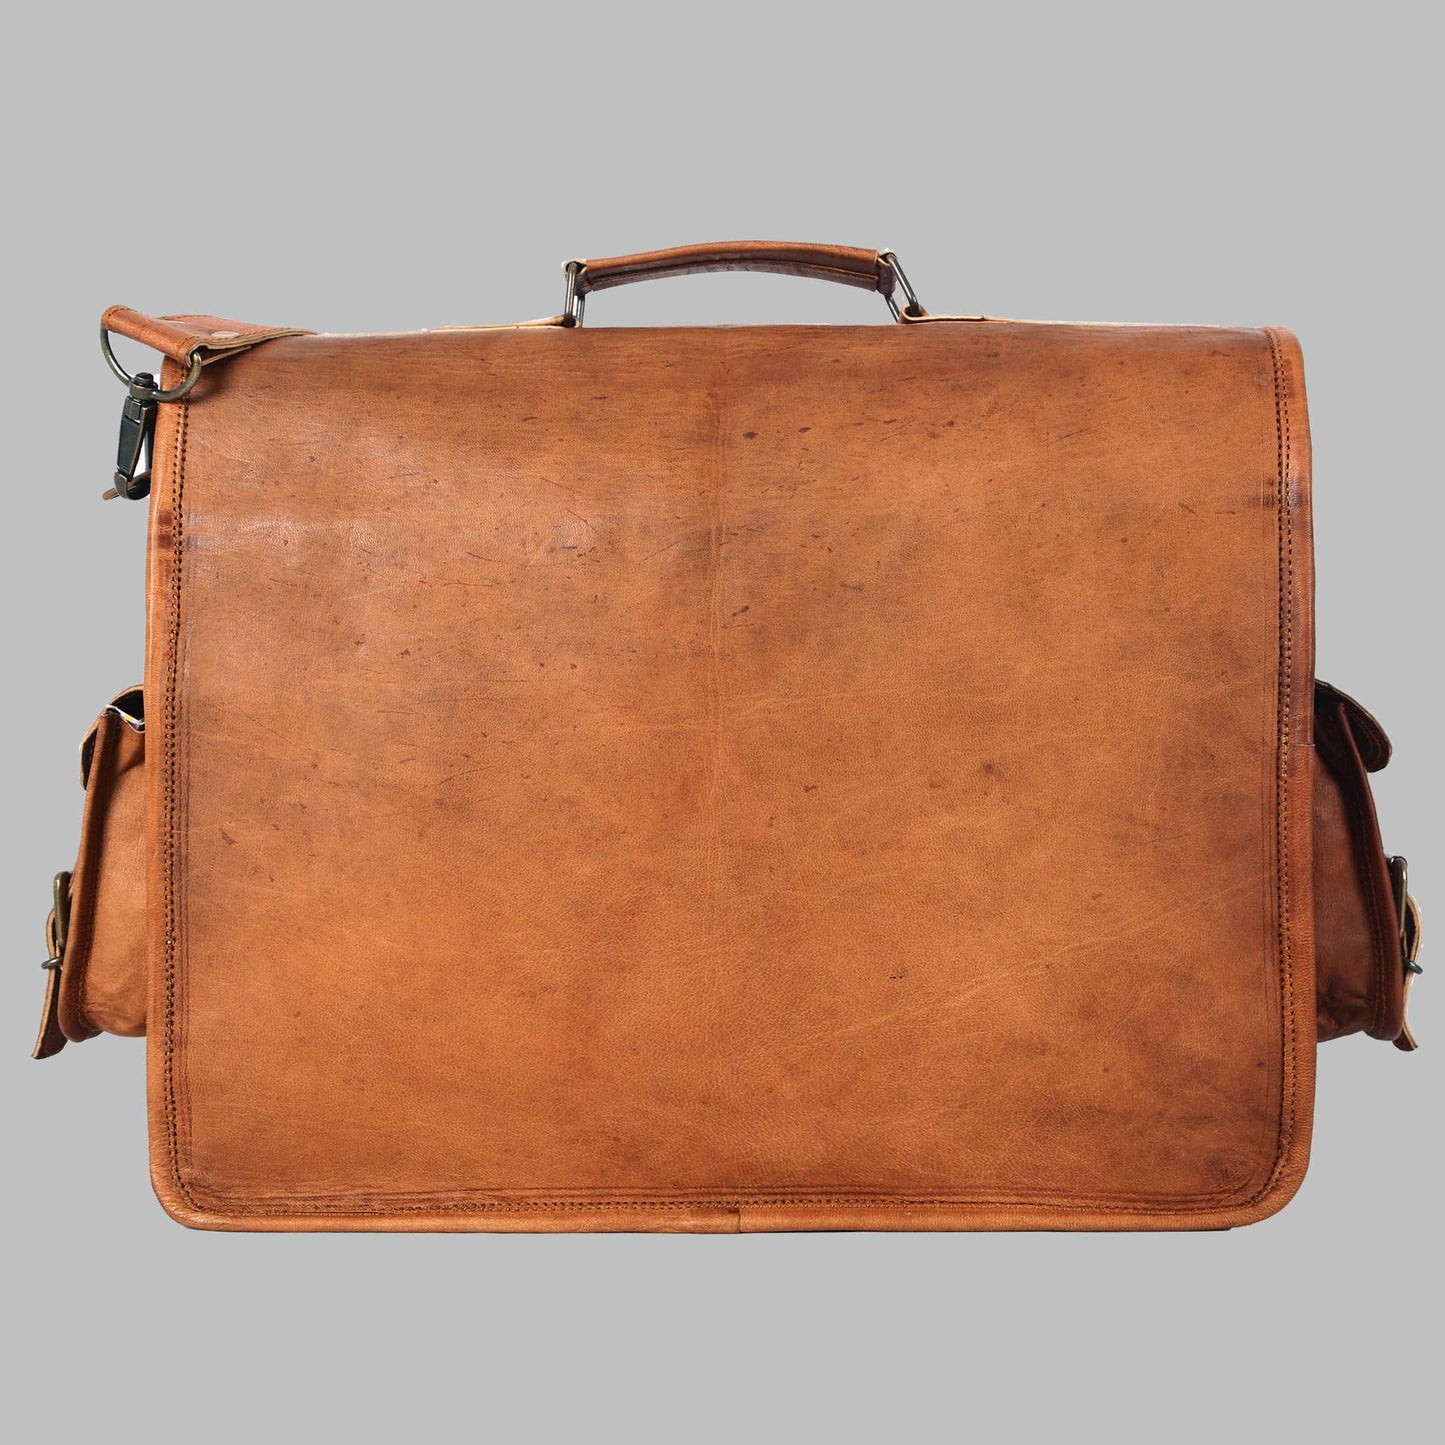 Leather Messenger Bag for Men and Women | Best Laptop Briefcase Satchel Computer Bag with Adjustable Strap